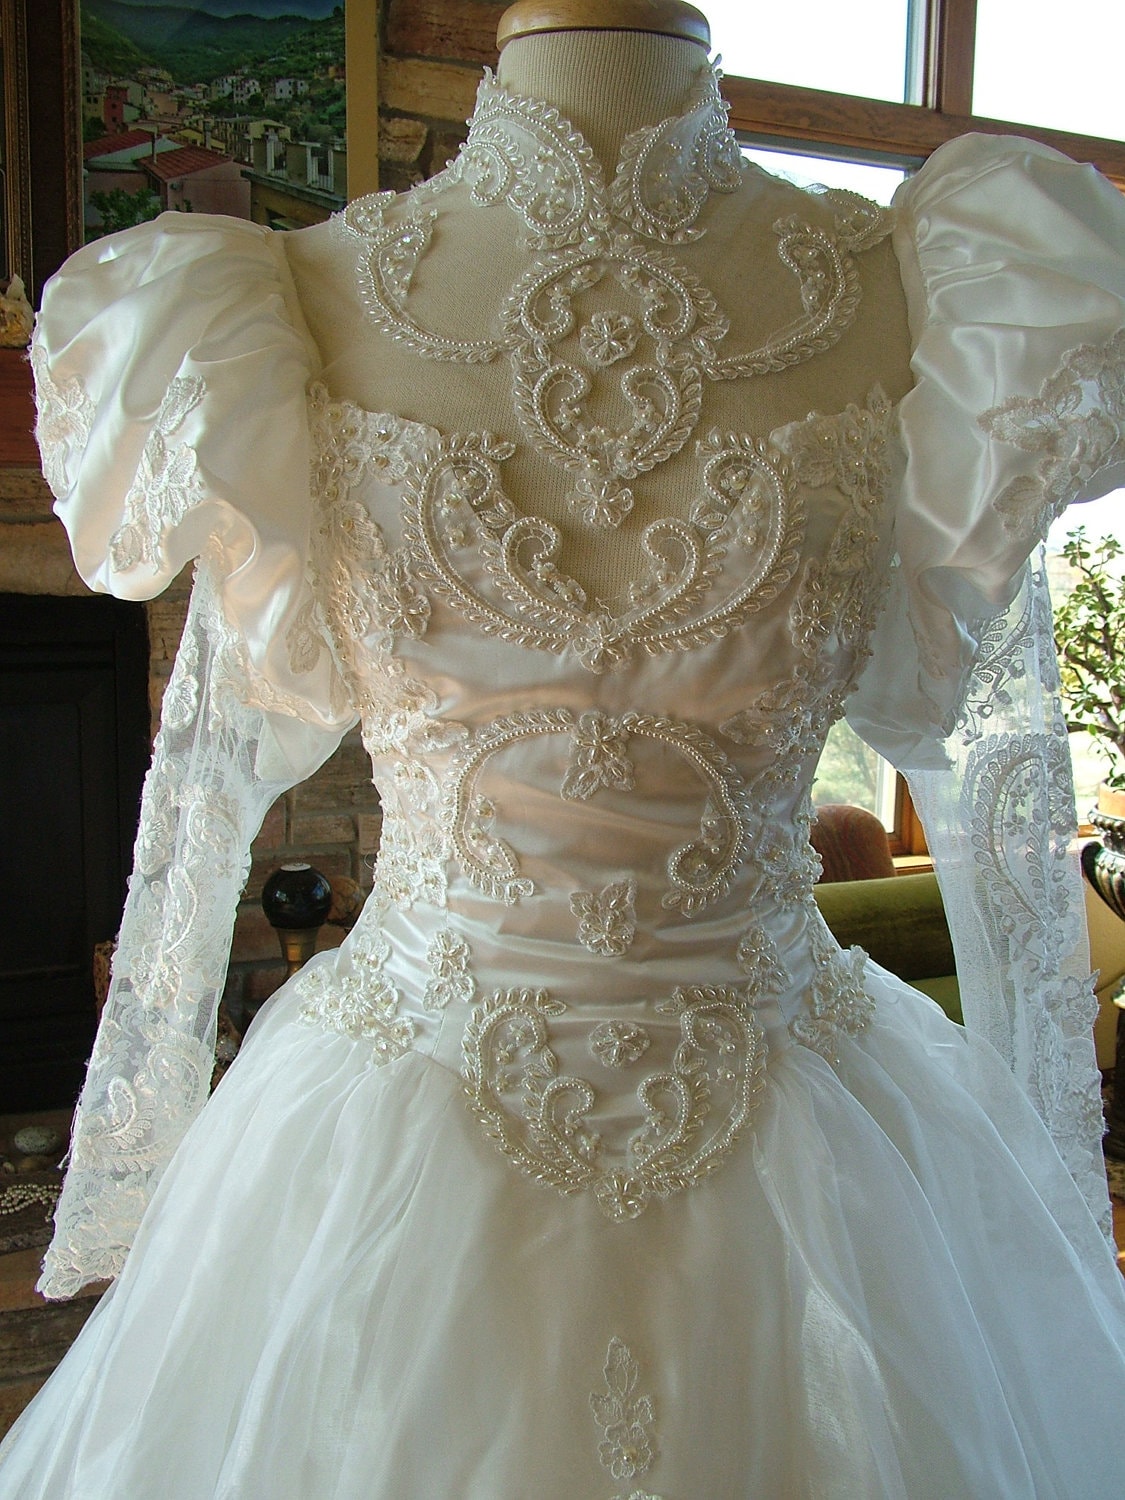 Wedding dress opulent 1980s bridal gown by RetroVintageWeddings